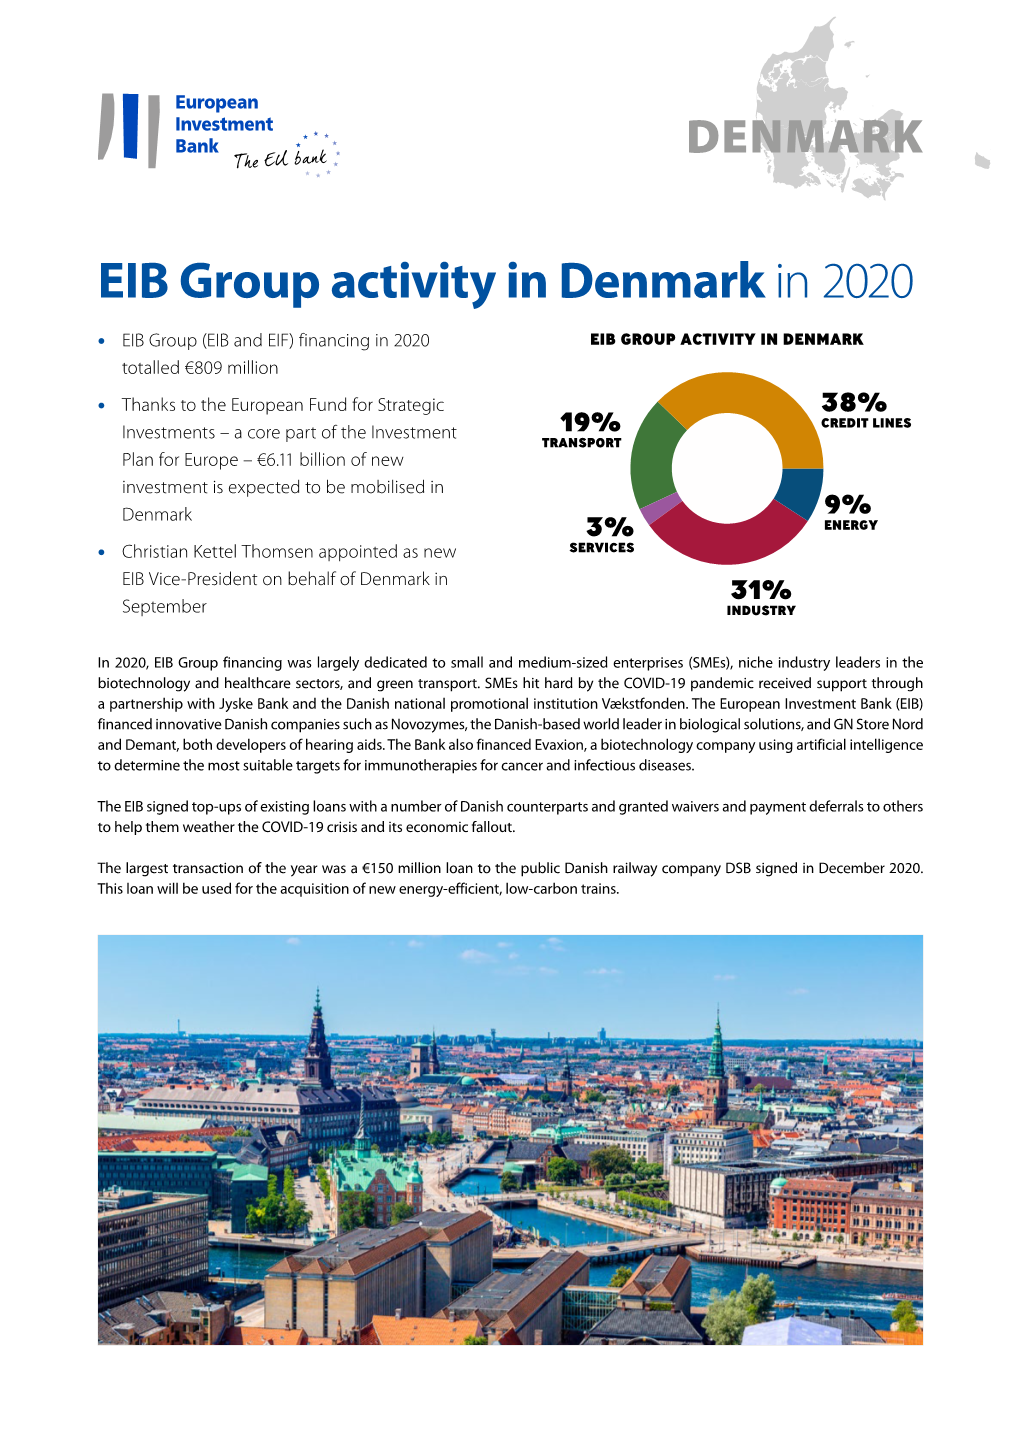 EIB Group Activity in Denmark in 2020